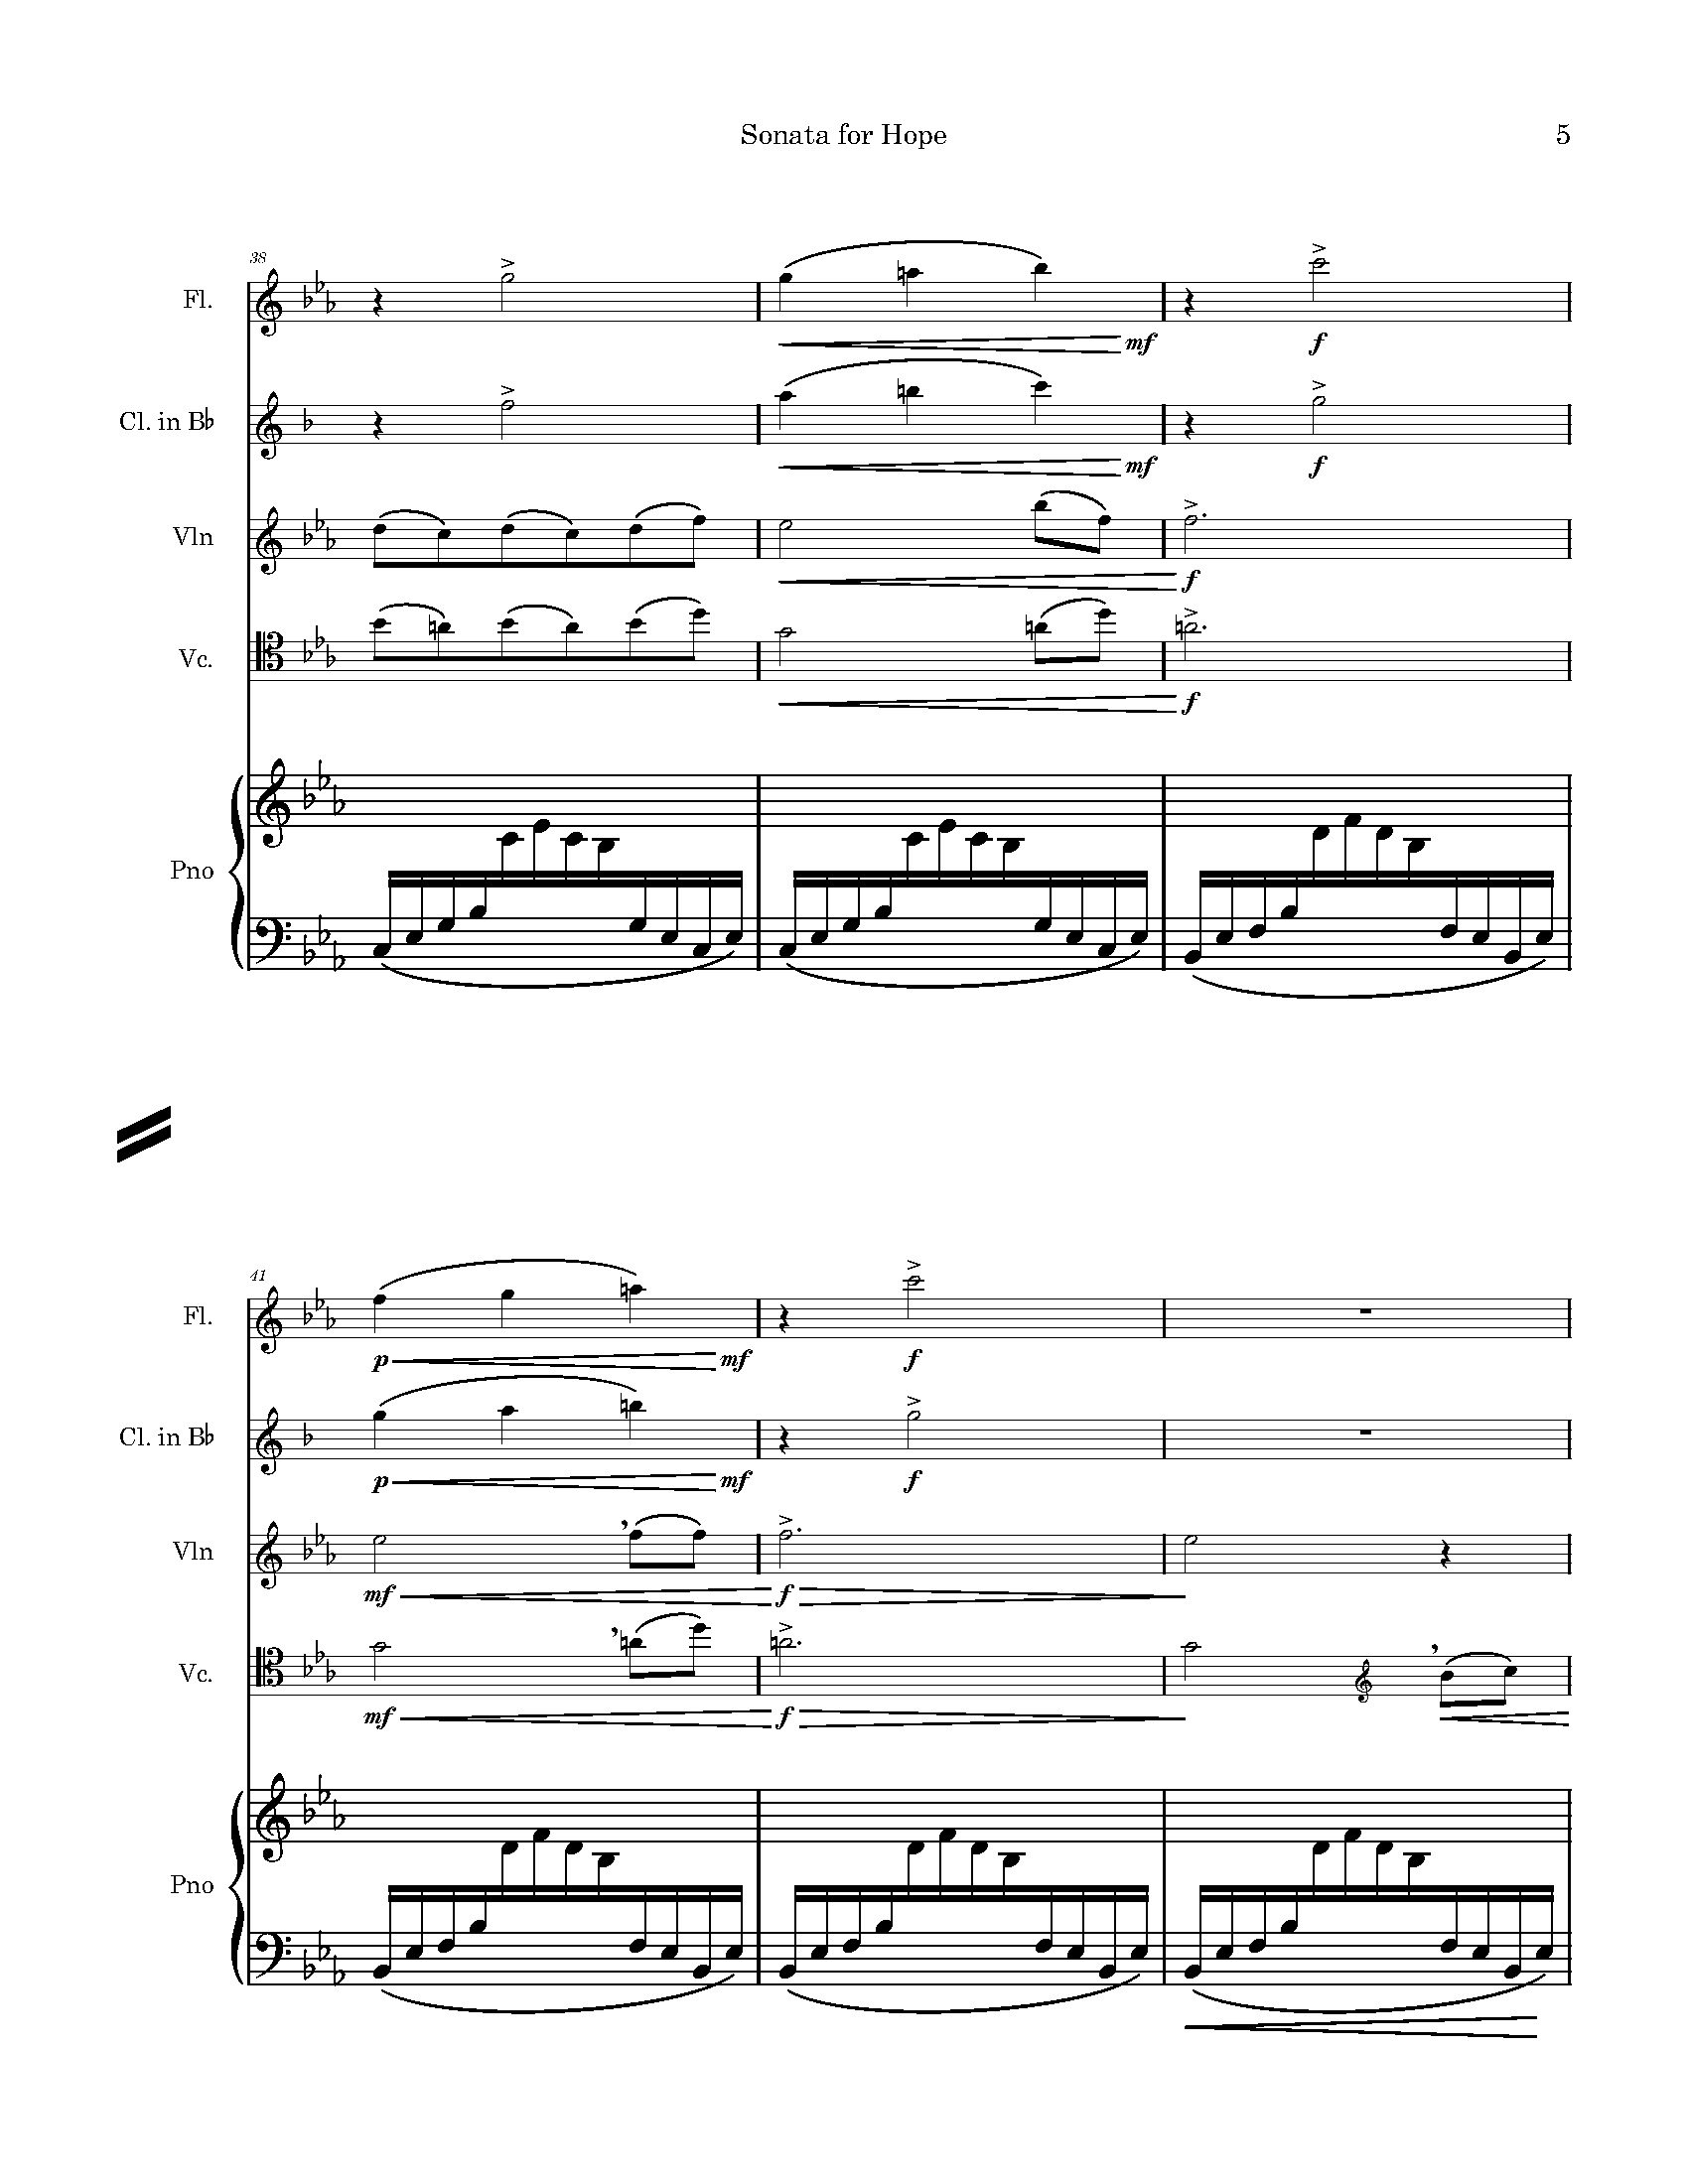 Sonata for Hope - Piano Score_Page_05.jpg